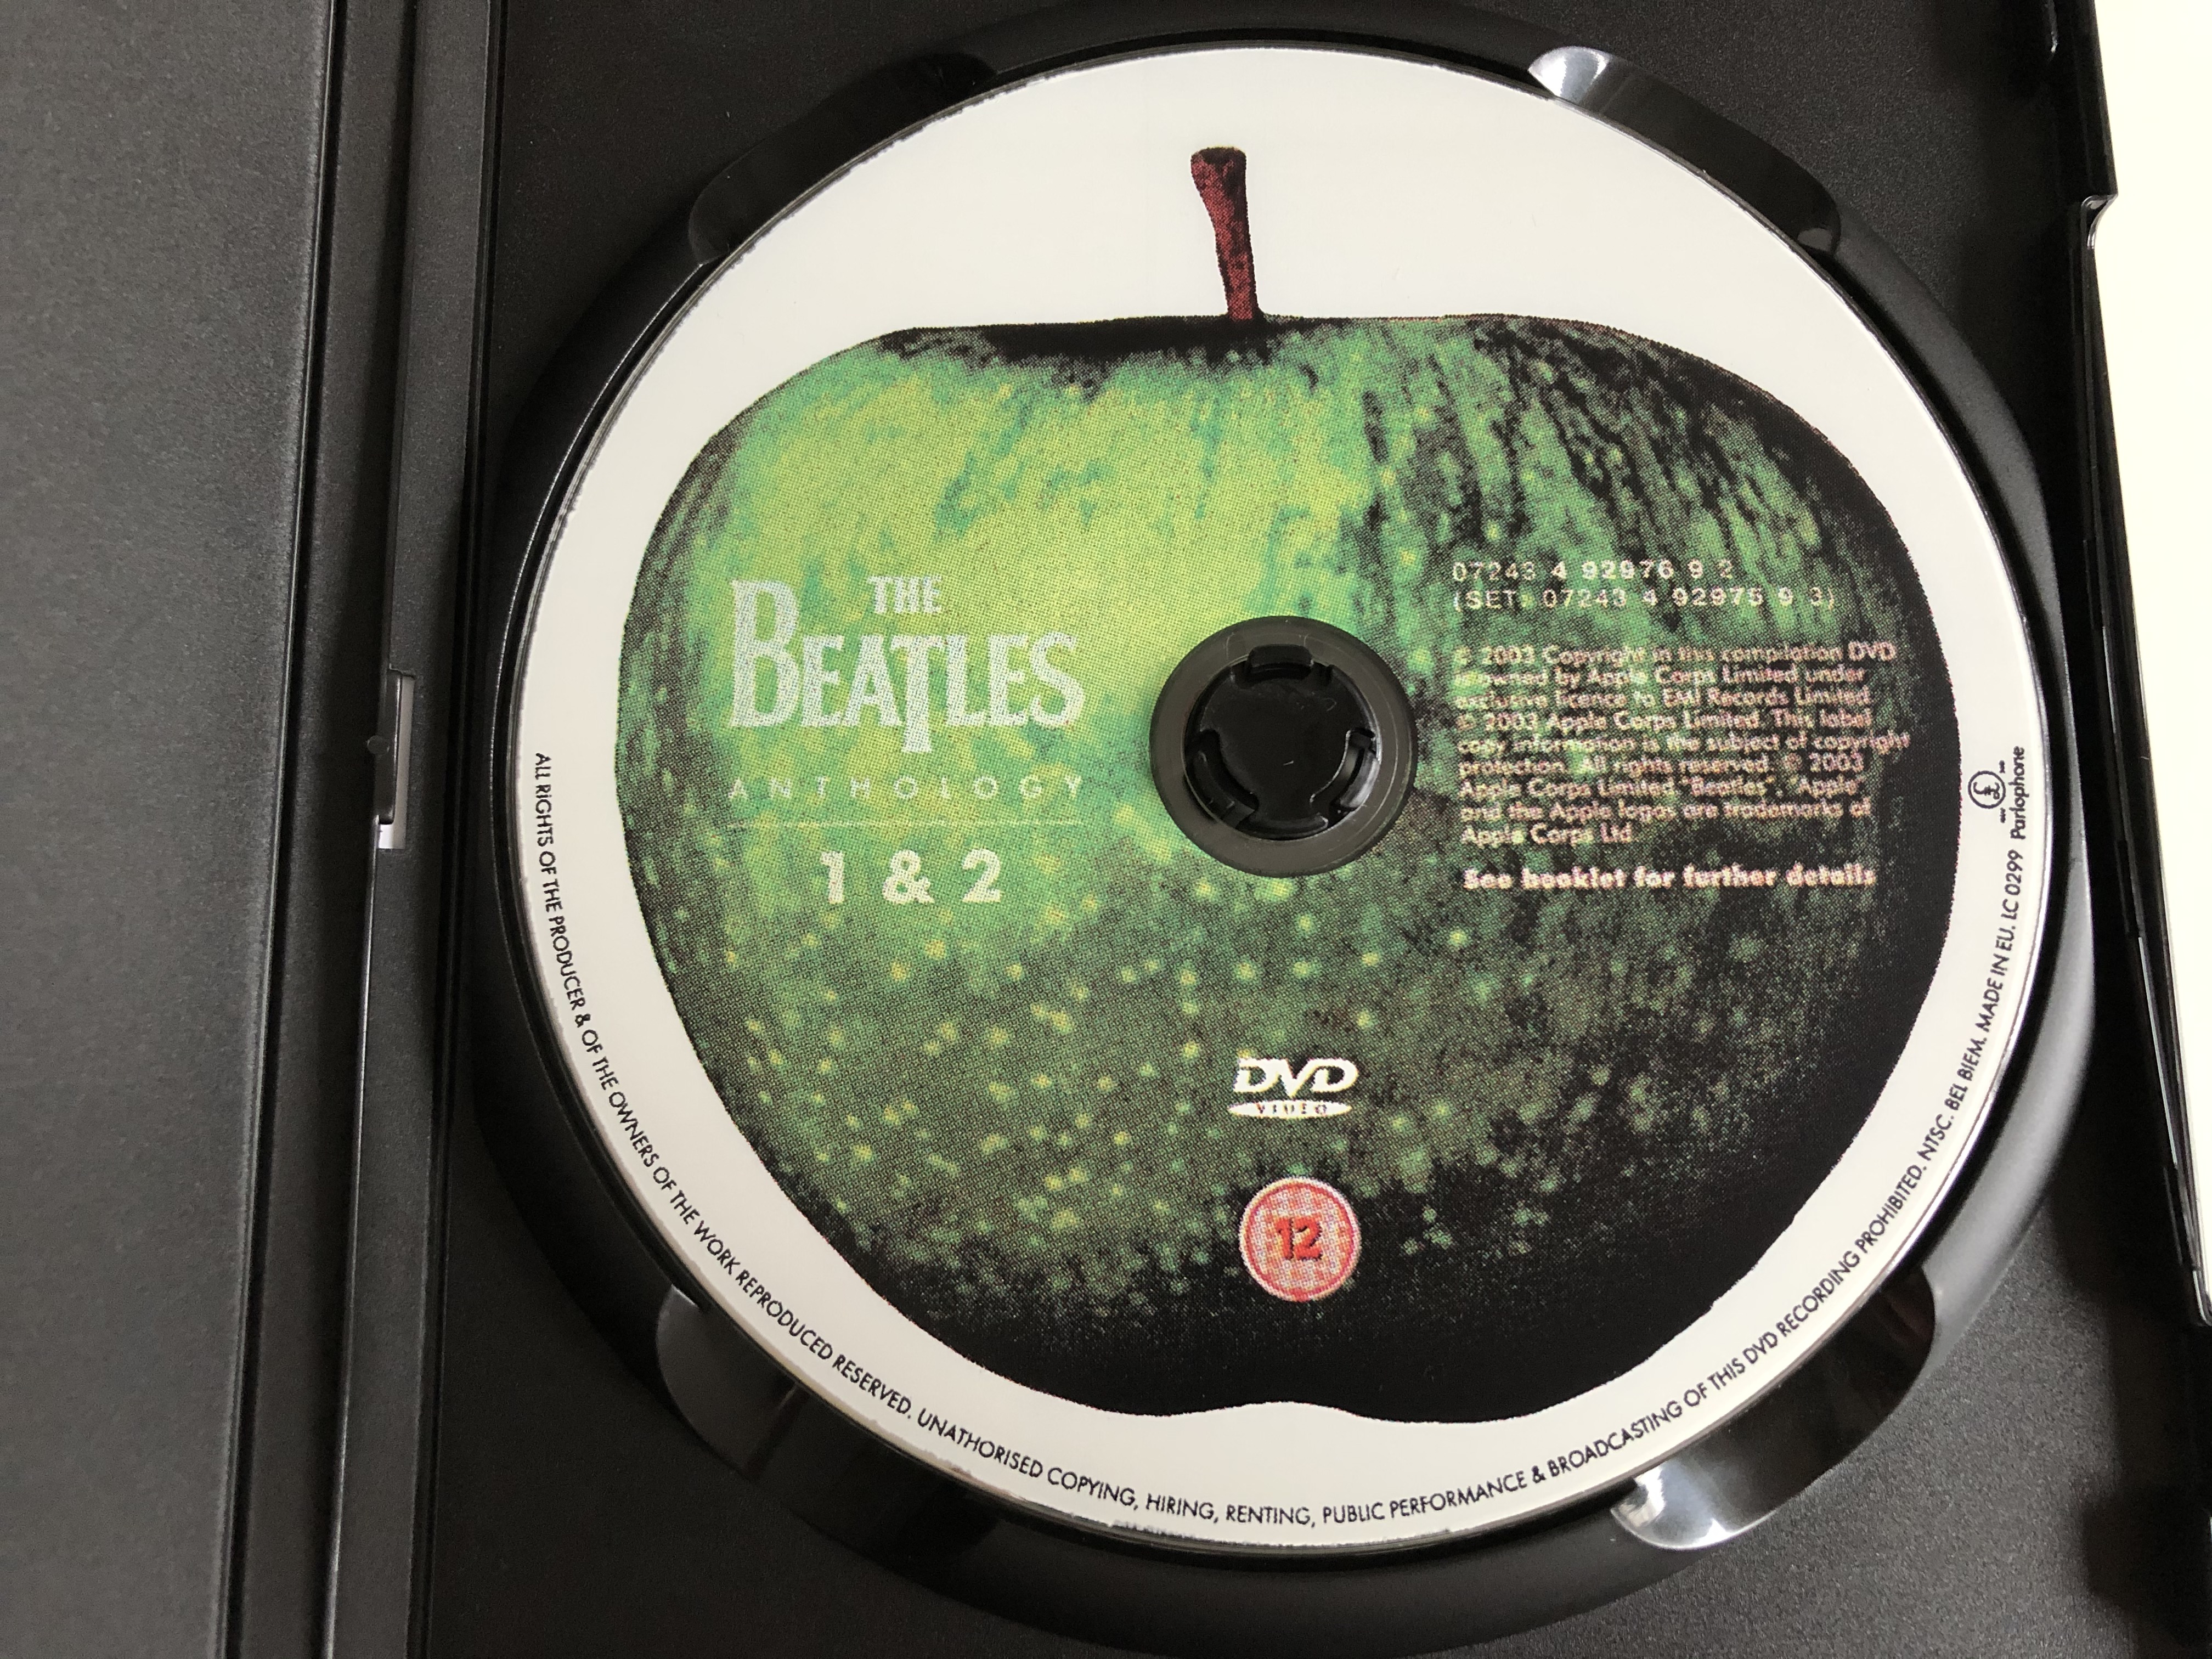 The Beatles Anthology 1&2 DVD 1.JPG